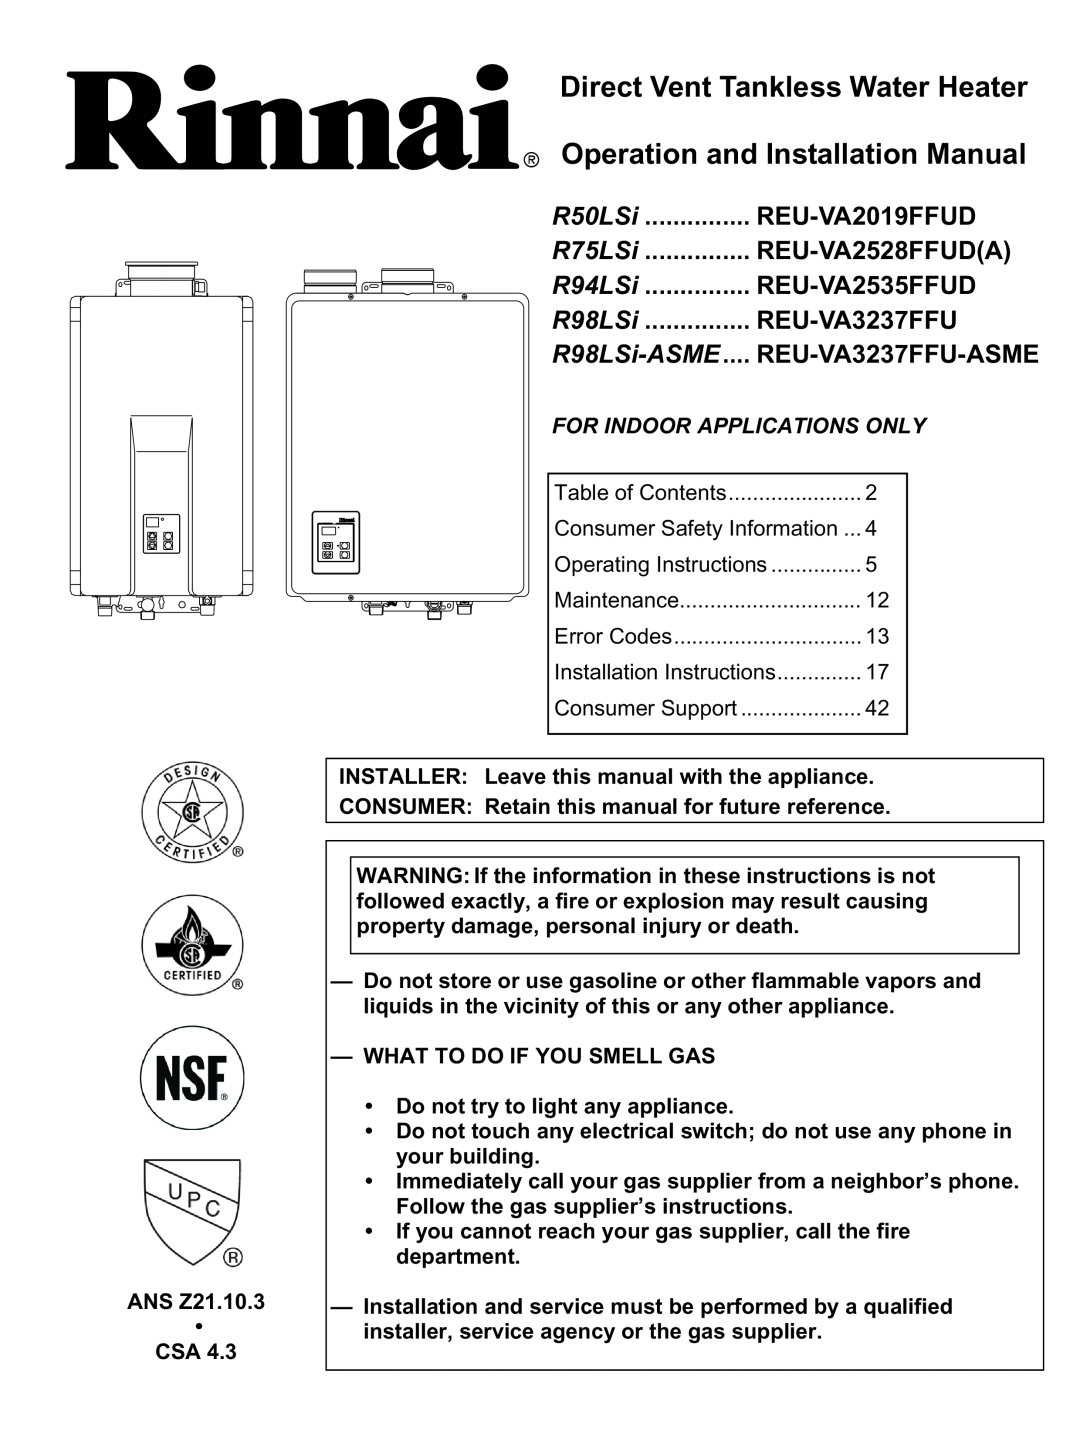 Rinnai REU-VA3237FFU installation manual Direct Vent Tankless Water Heater, Operation and Installation Manual, R50LSi 